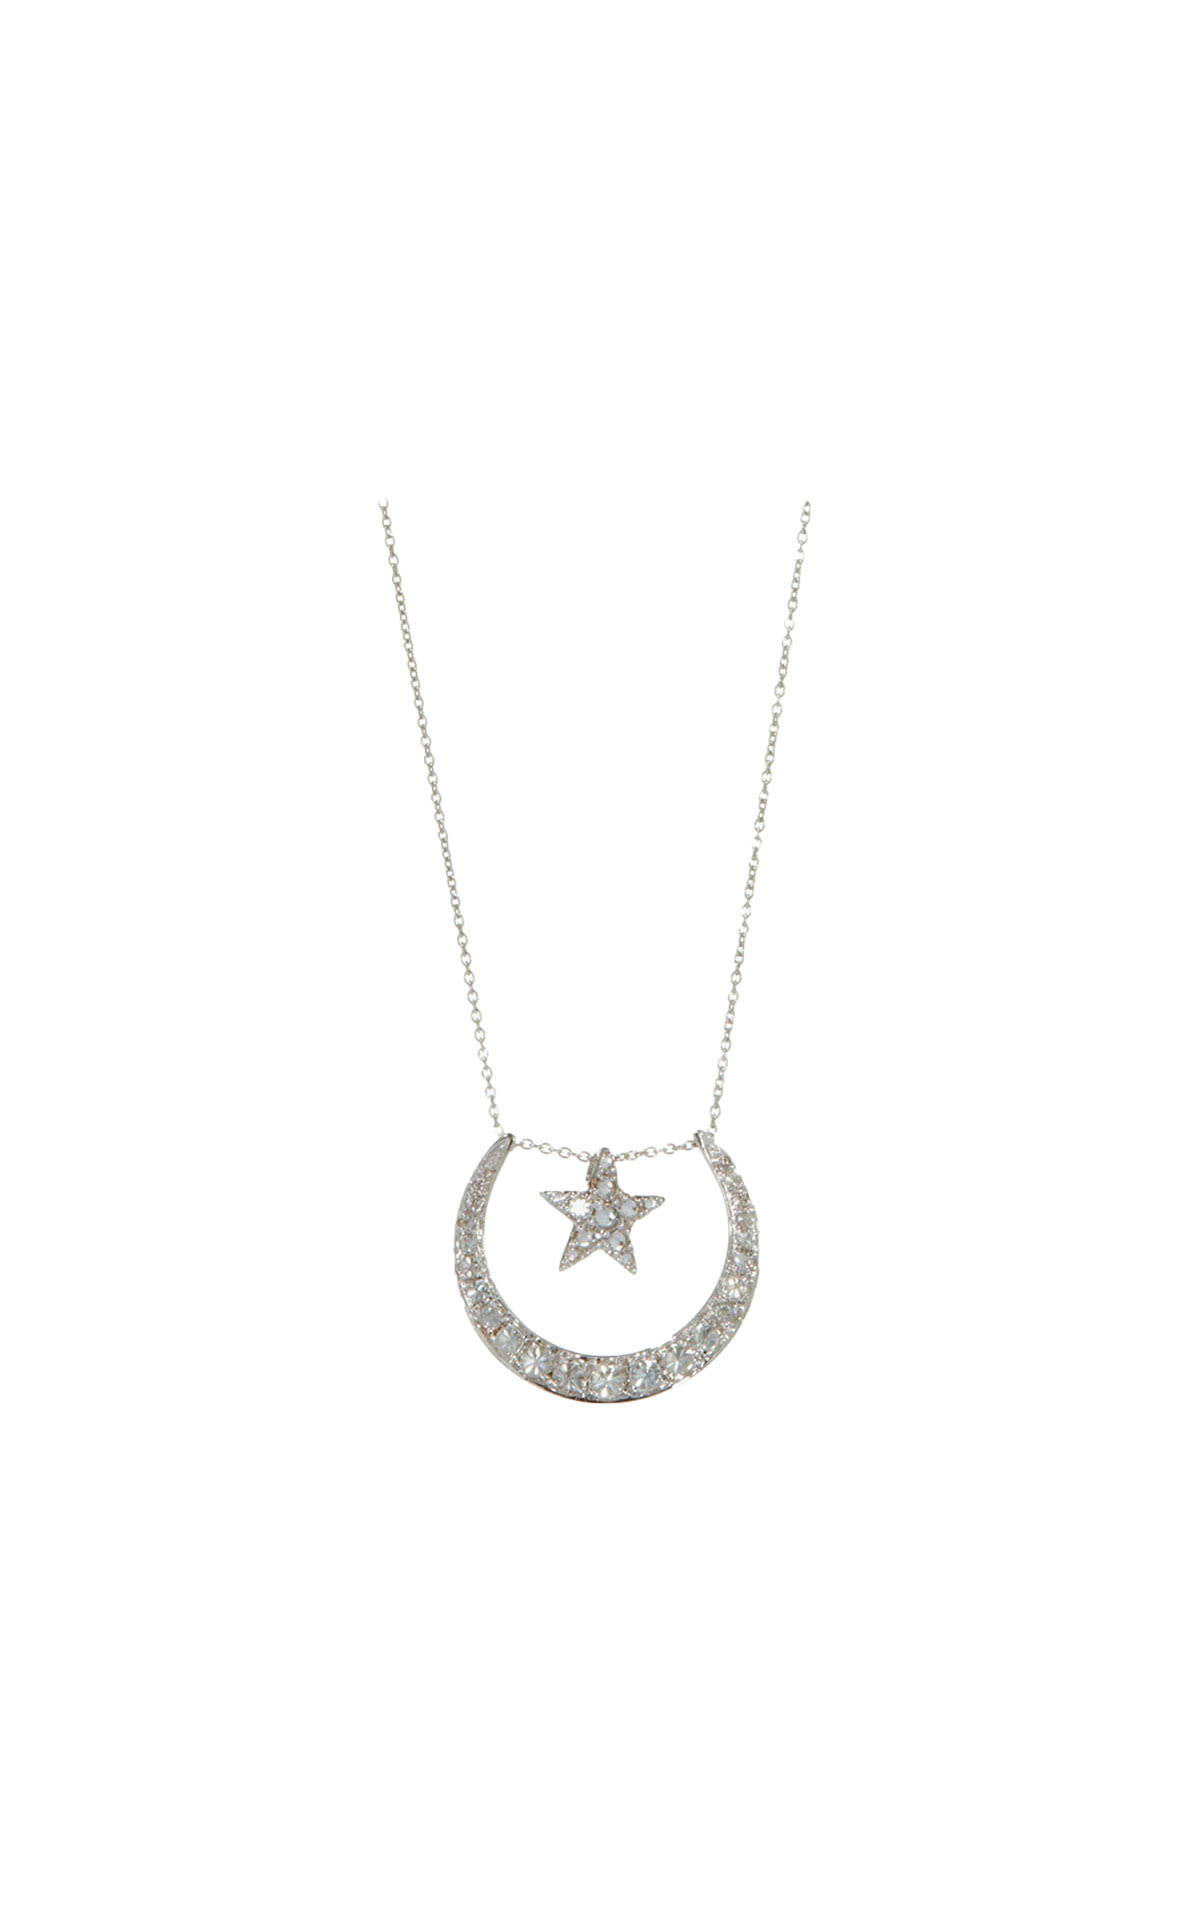 Annoushka Luna love diamond necklace from Bicester Village